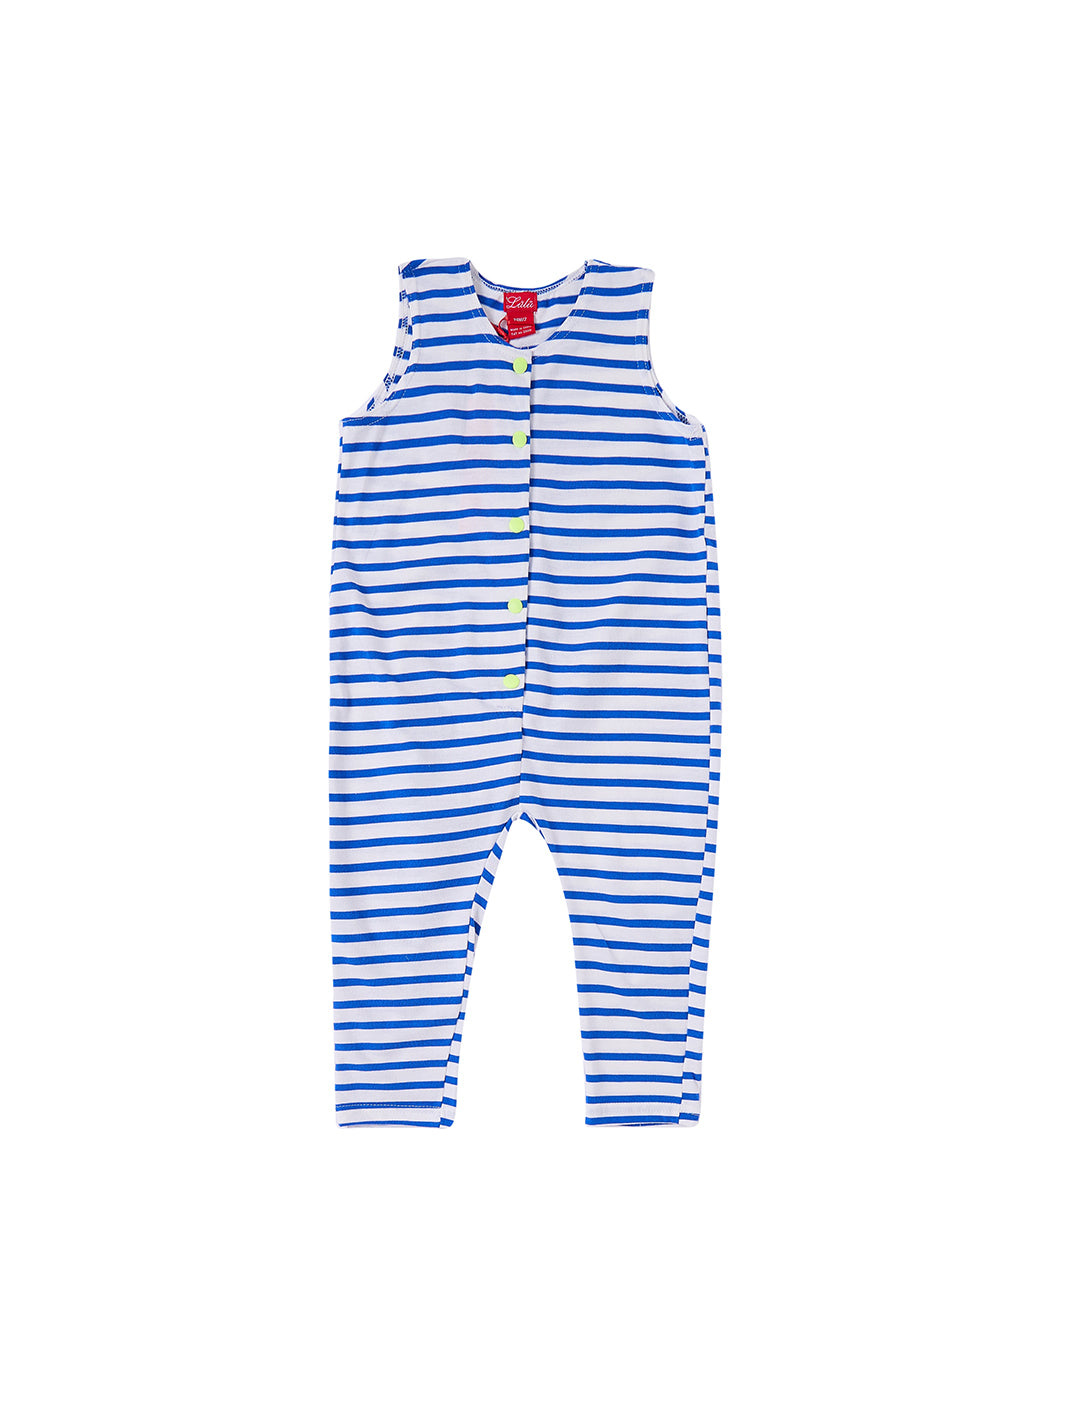 Baby Overlap Overall - White/Royal Blue